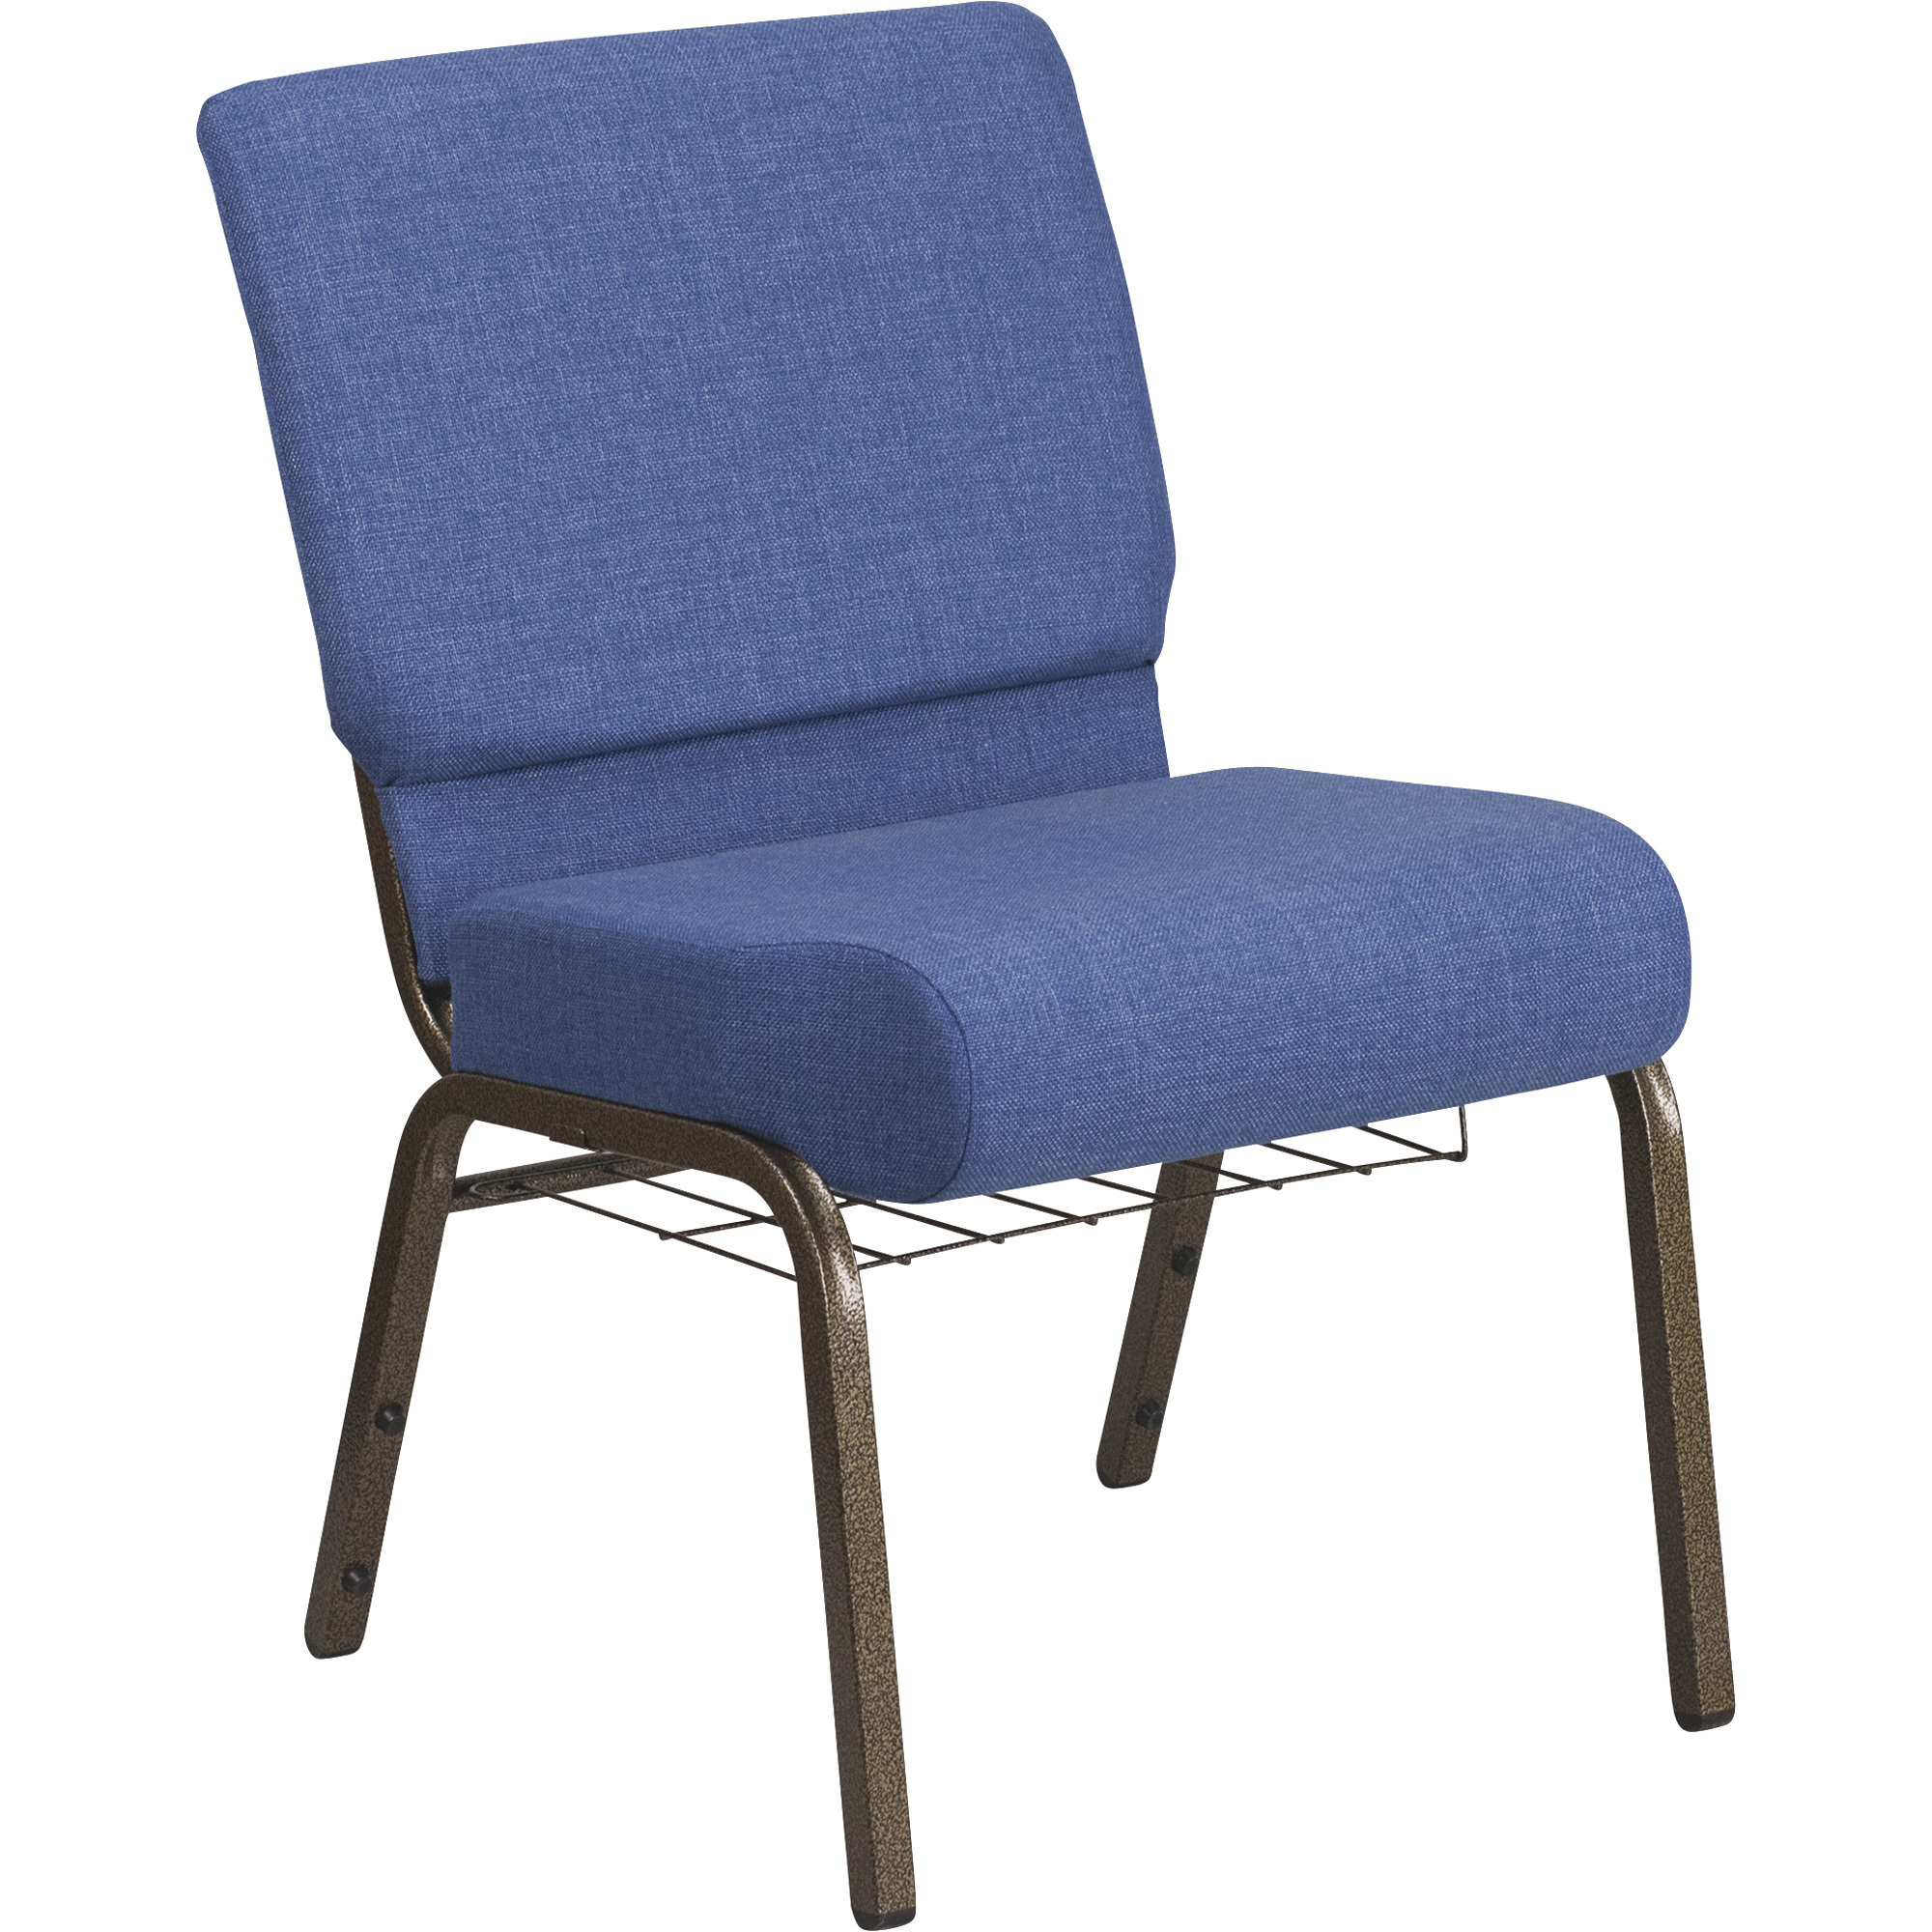 Flash Furniture Fabric Church Chair with Cup/Book Rack â Blue w/Gold Vein Frame, 21 1/4Inch W x 25Inch D x 33 1/4Inch H, Model FCH2214GVBLUB